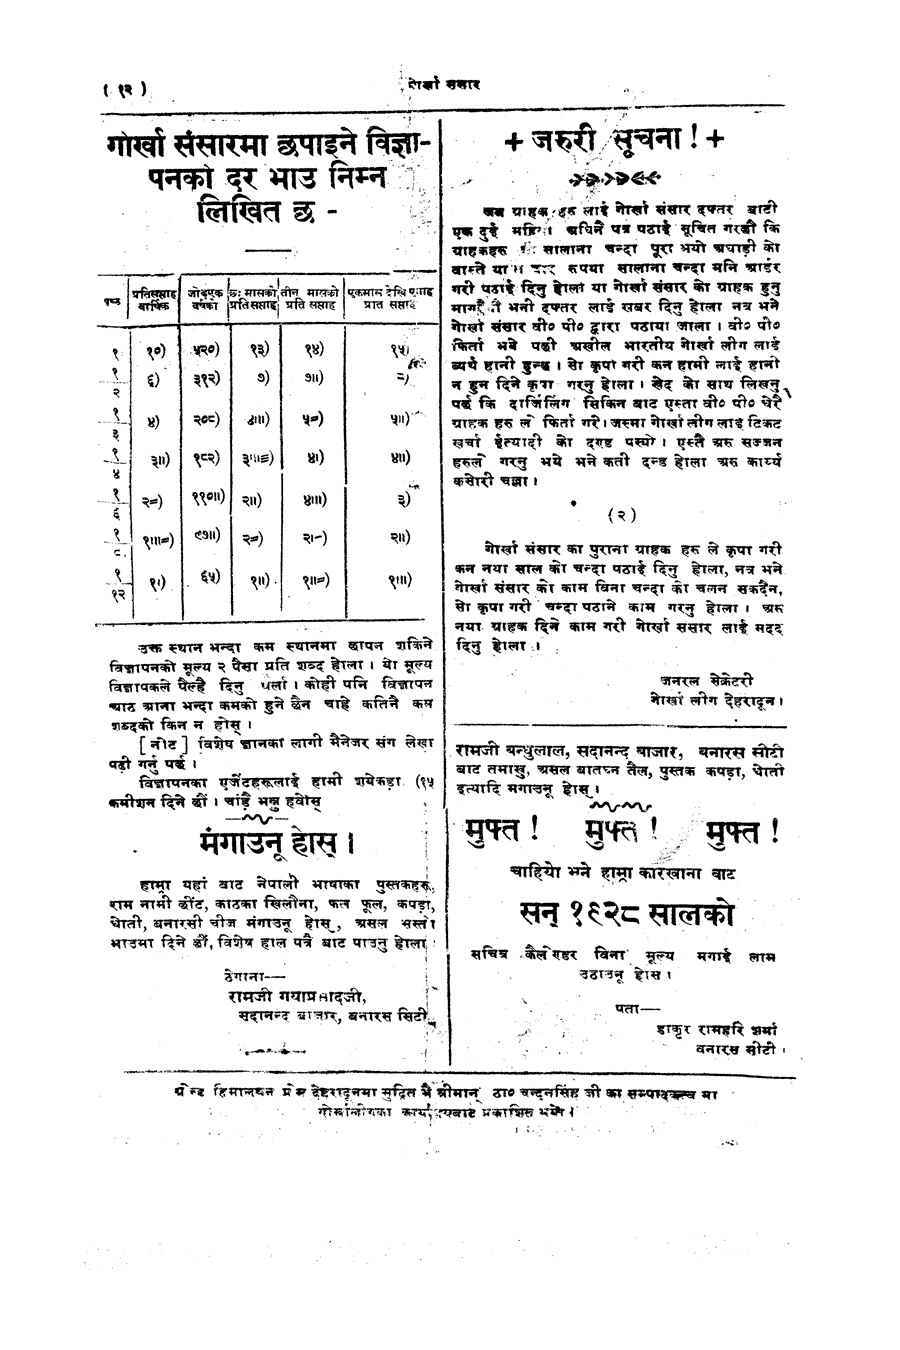 Gorkha Sansar, 8 June 1928, page 12